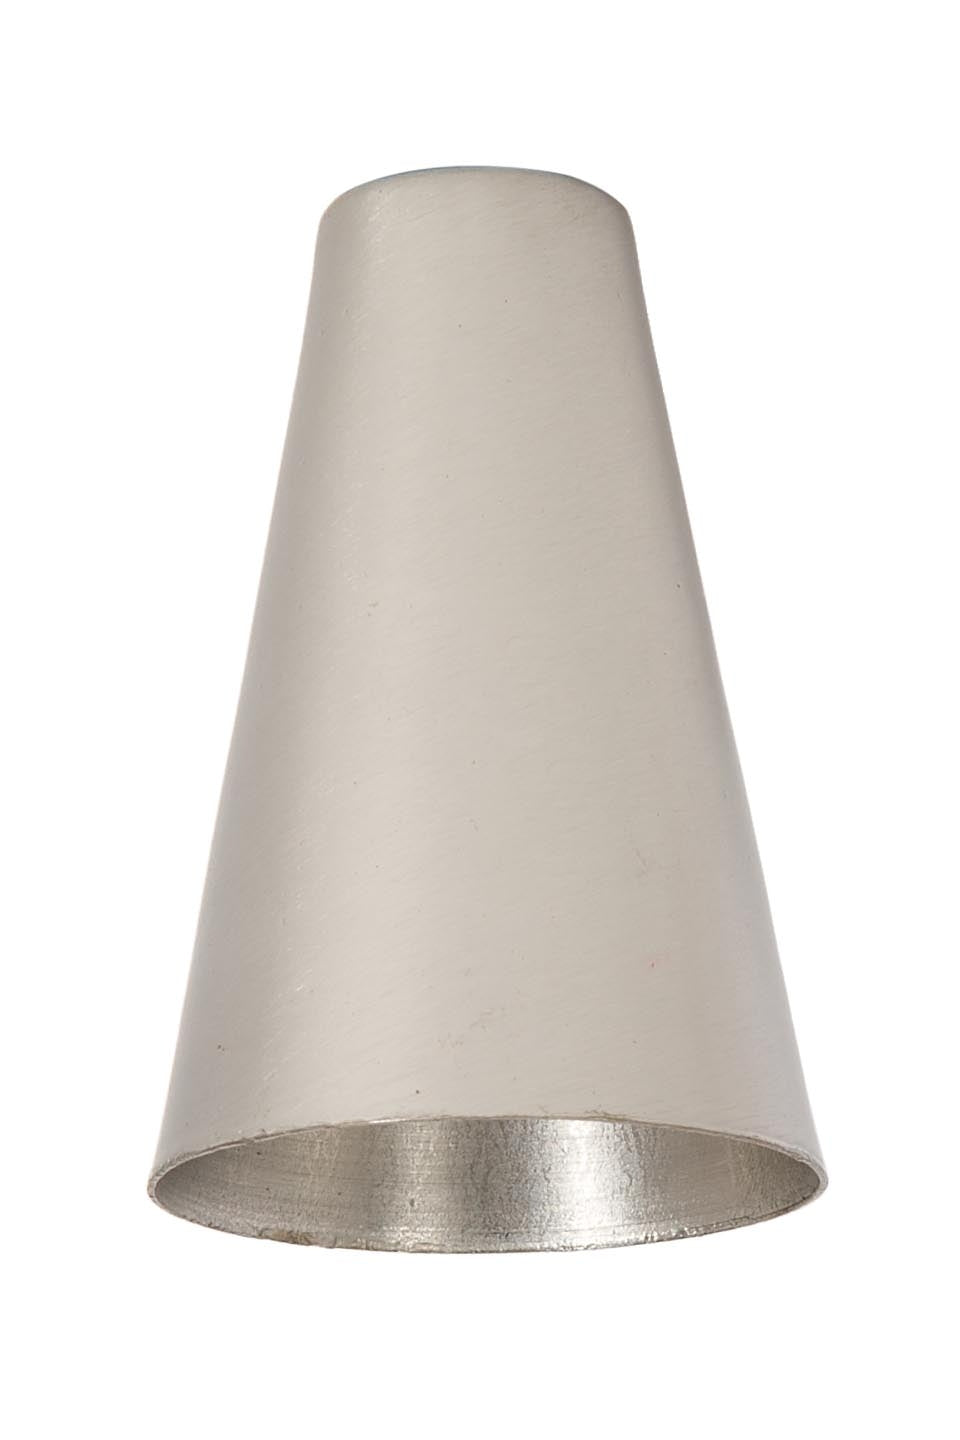 3-3/8 Inch Tall Satin Nickel Finish Brass Cone Lighting Socket Cup, 1/8IP